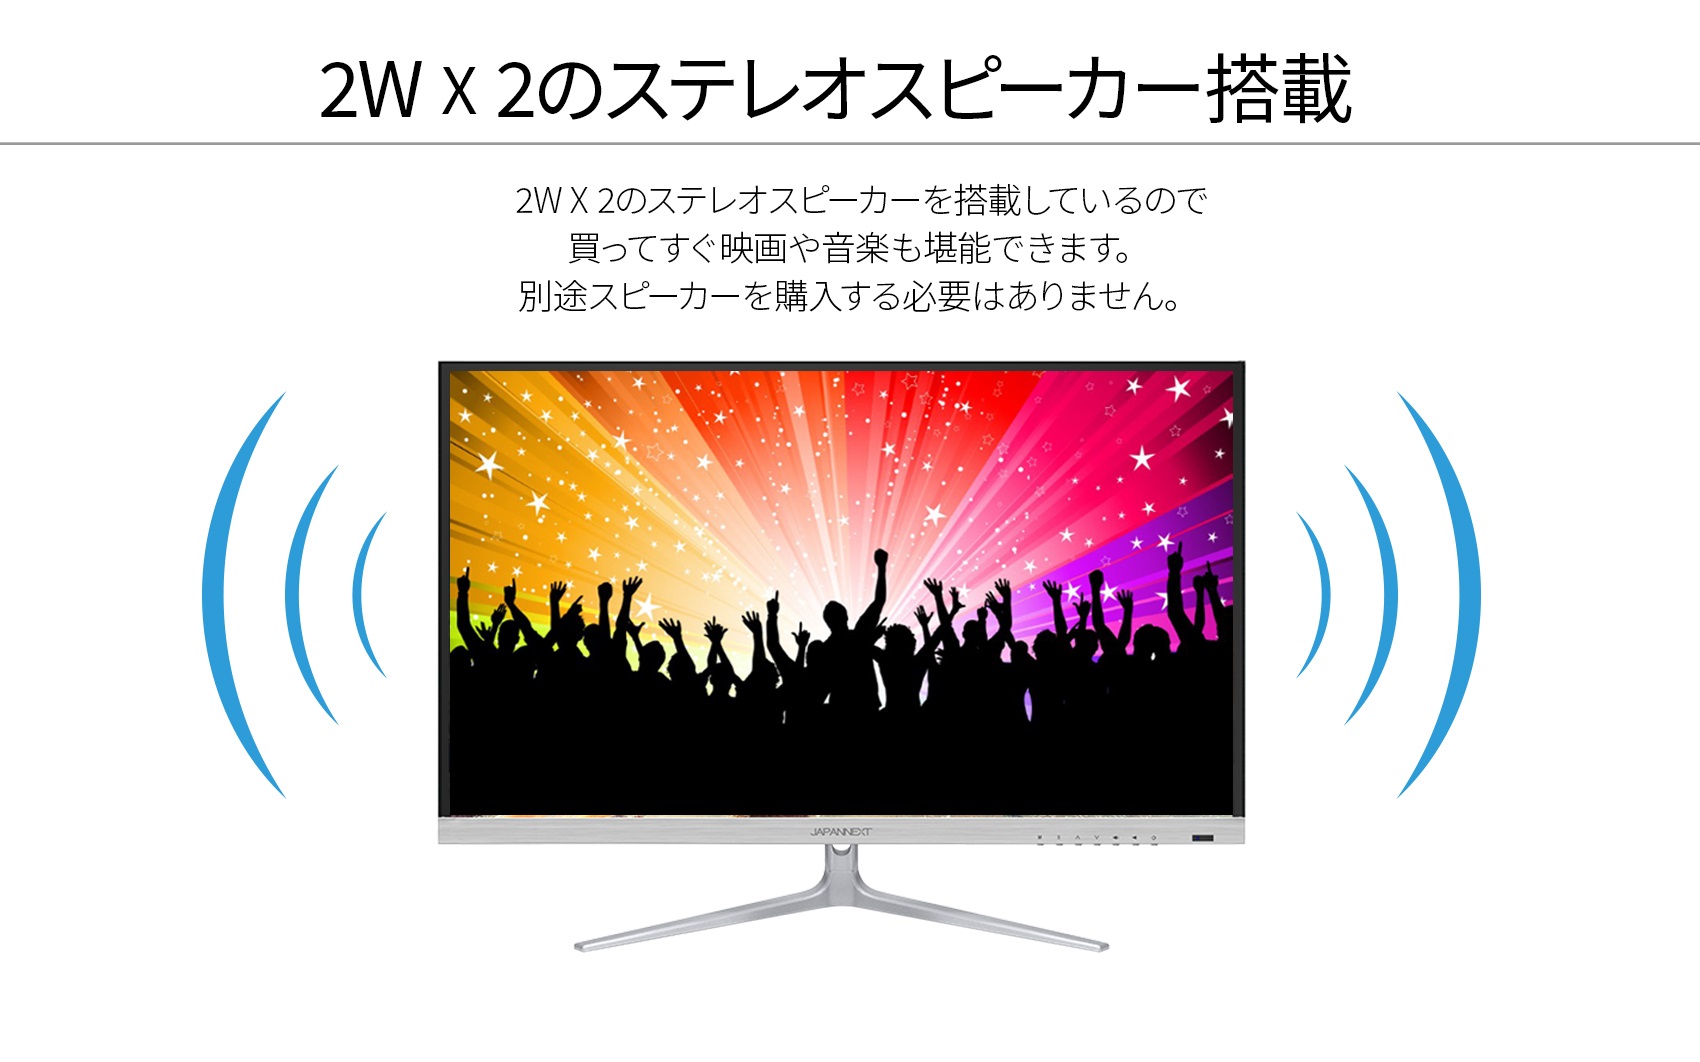 JAPANNEXT 液晶モニター 32インチ IPSパネル 4K ワイド 60Hz PC HDMI 